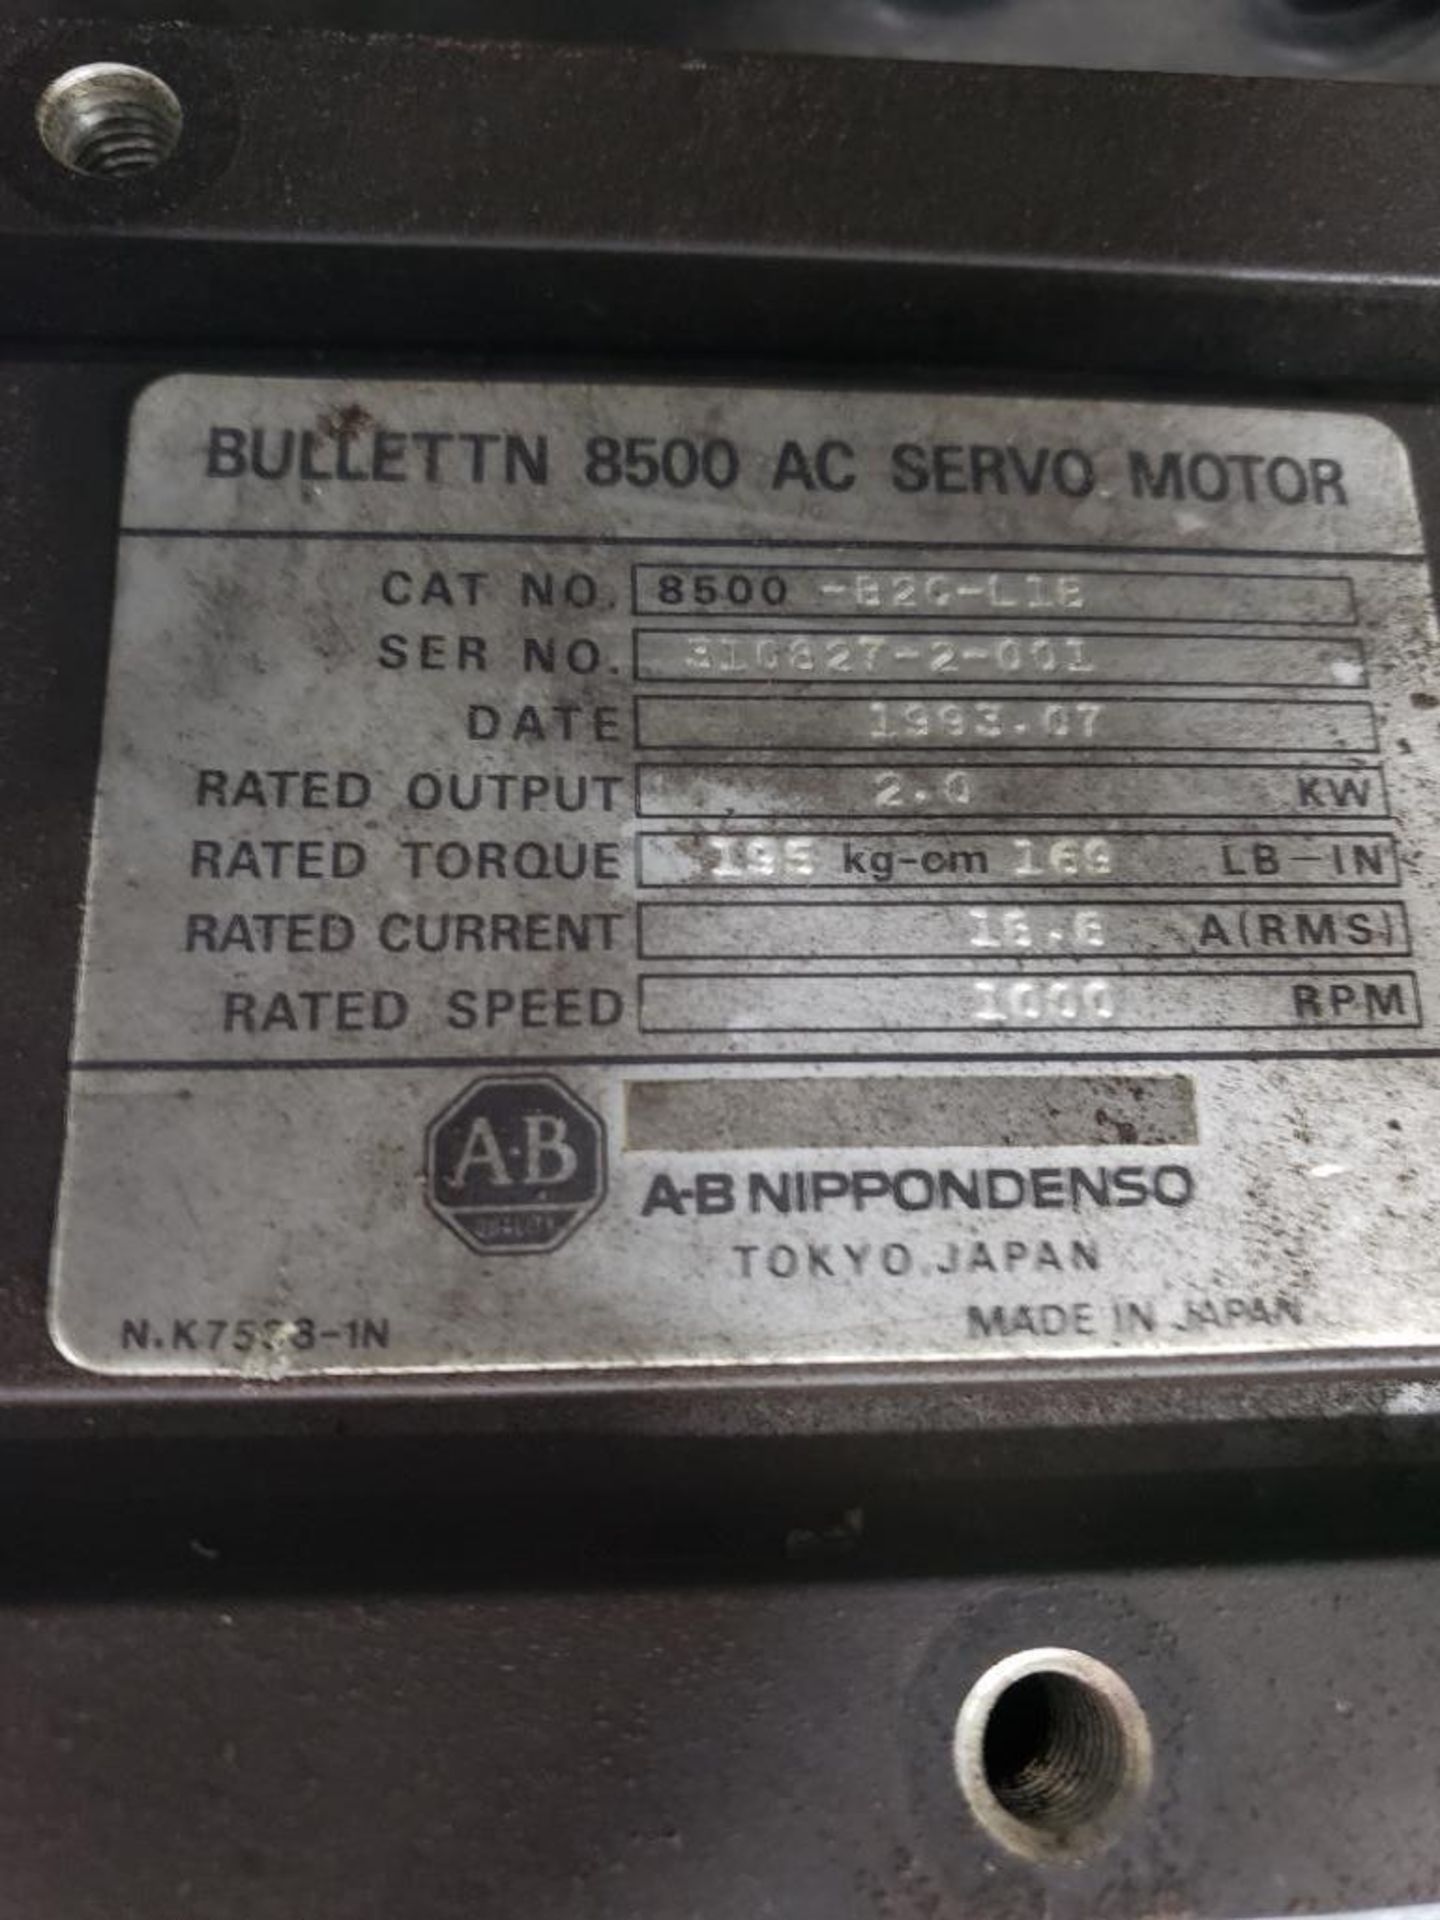 Allen Bradley servo motor bulletin 8500 AC servo motor, catalog number 8500-82C-L1B. - Bild 3 aus 5